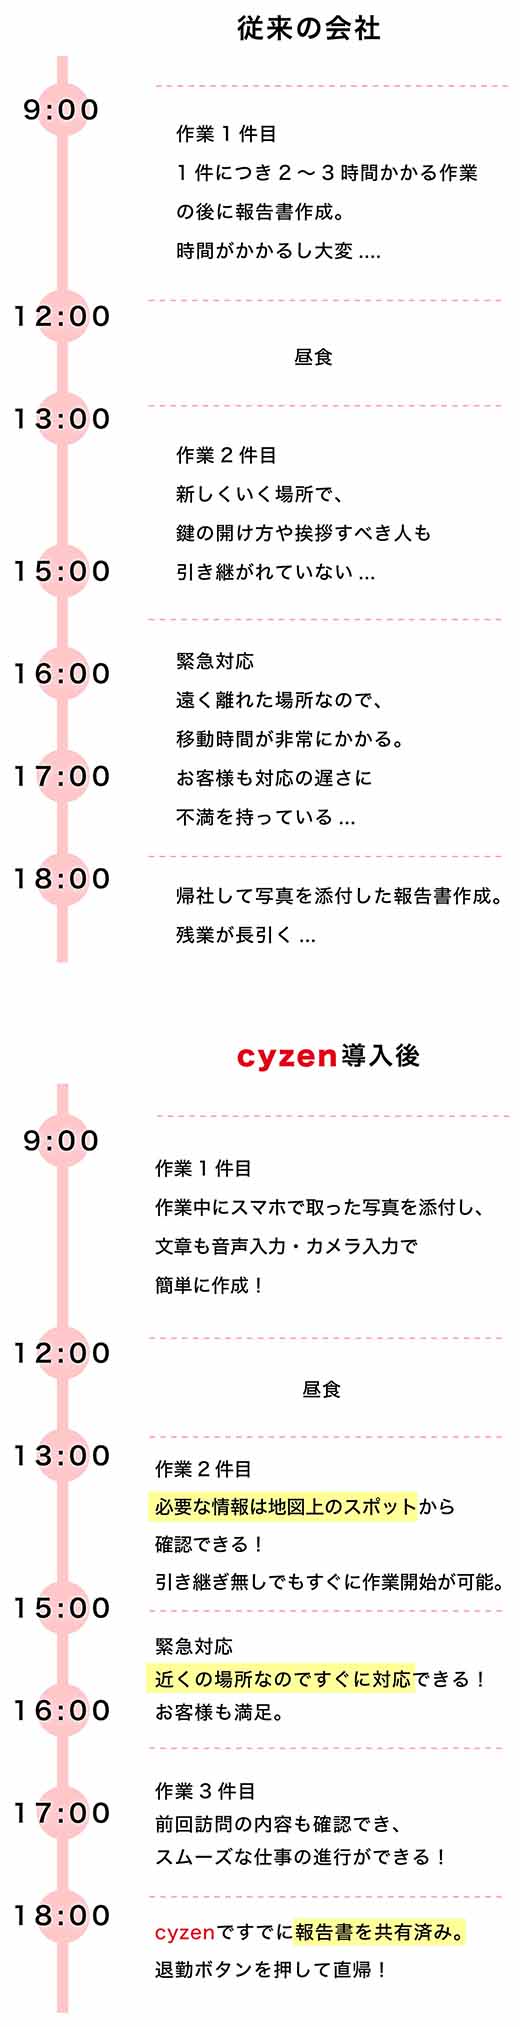 cyzen導入時業務比較表